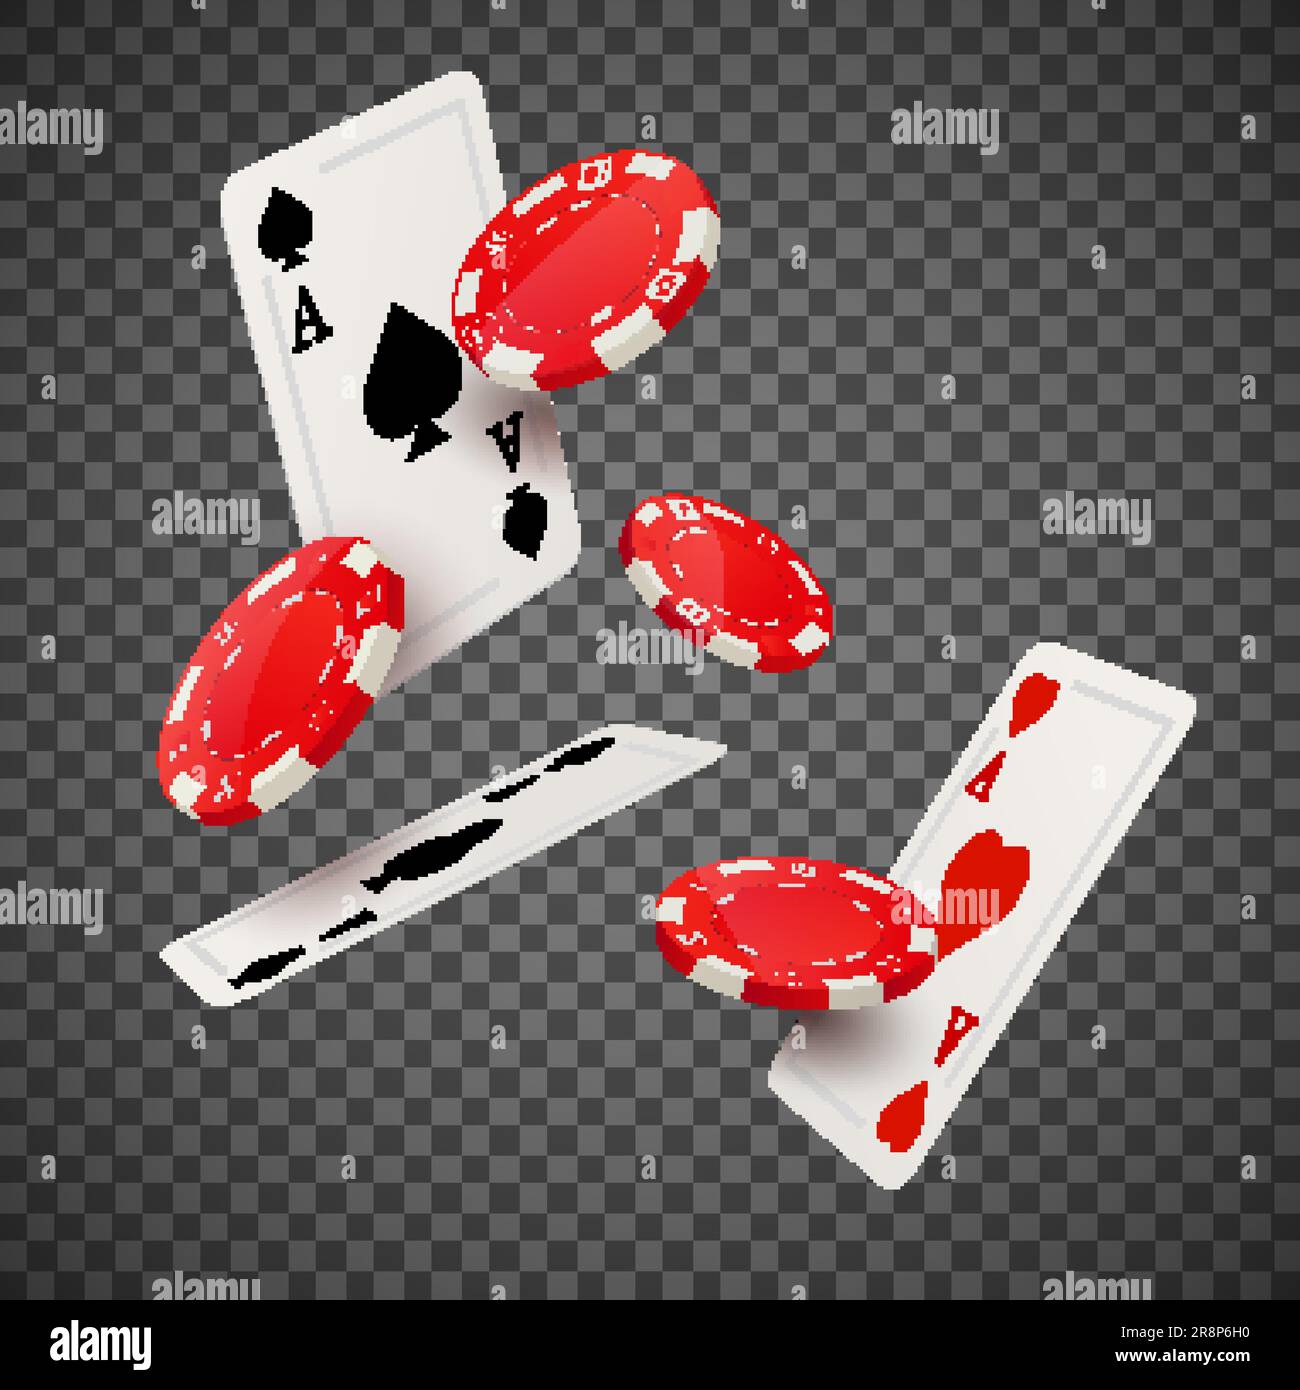 Poker Casino Chip Flying Card Vektor isolierter transparenter Hintergrund. Designkonzept für Red Gamble Poker Casino-Chips. Stock Vektor